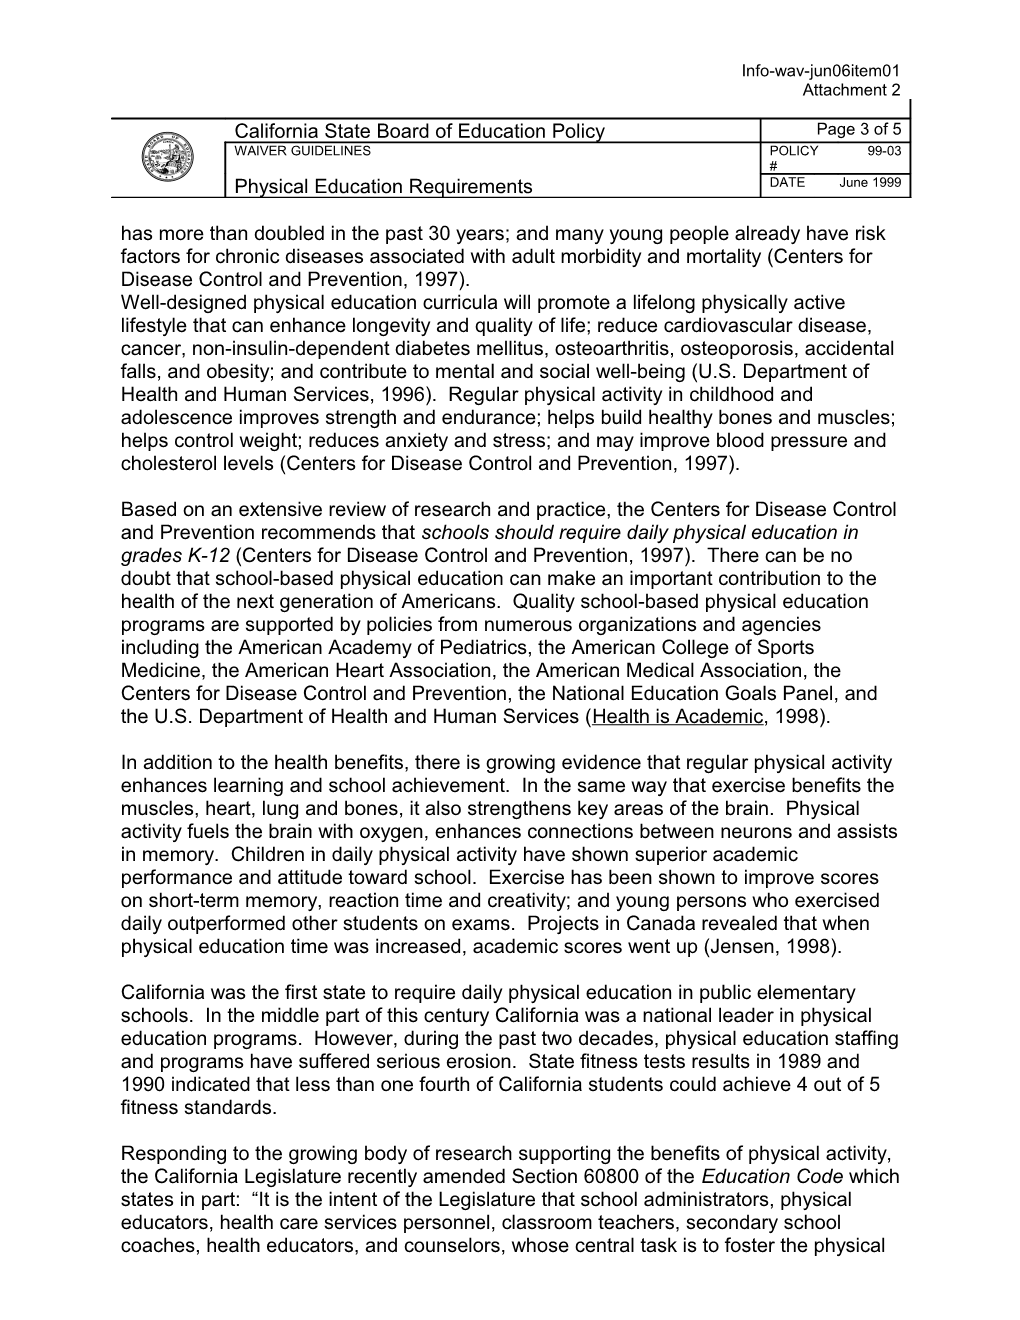 June 2006 Waiver Item 01 Attachment 2 - Information Memorandum (CA State Board of Education)